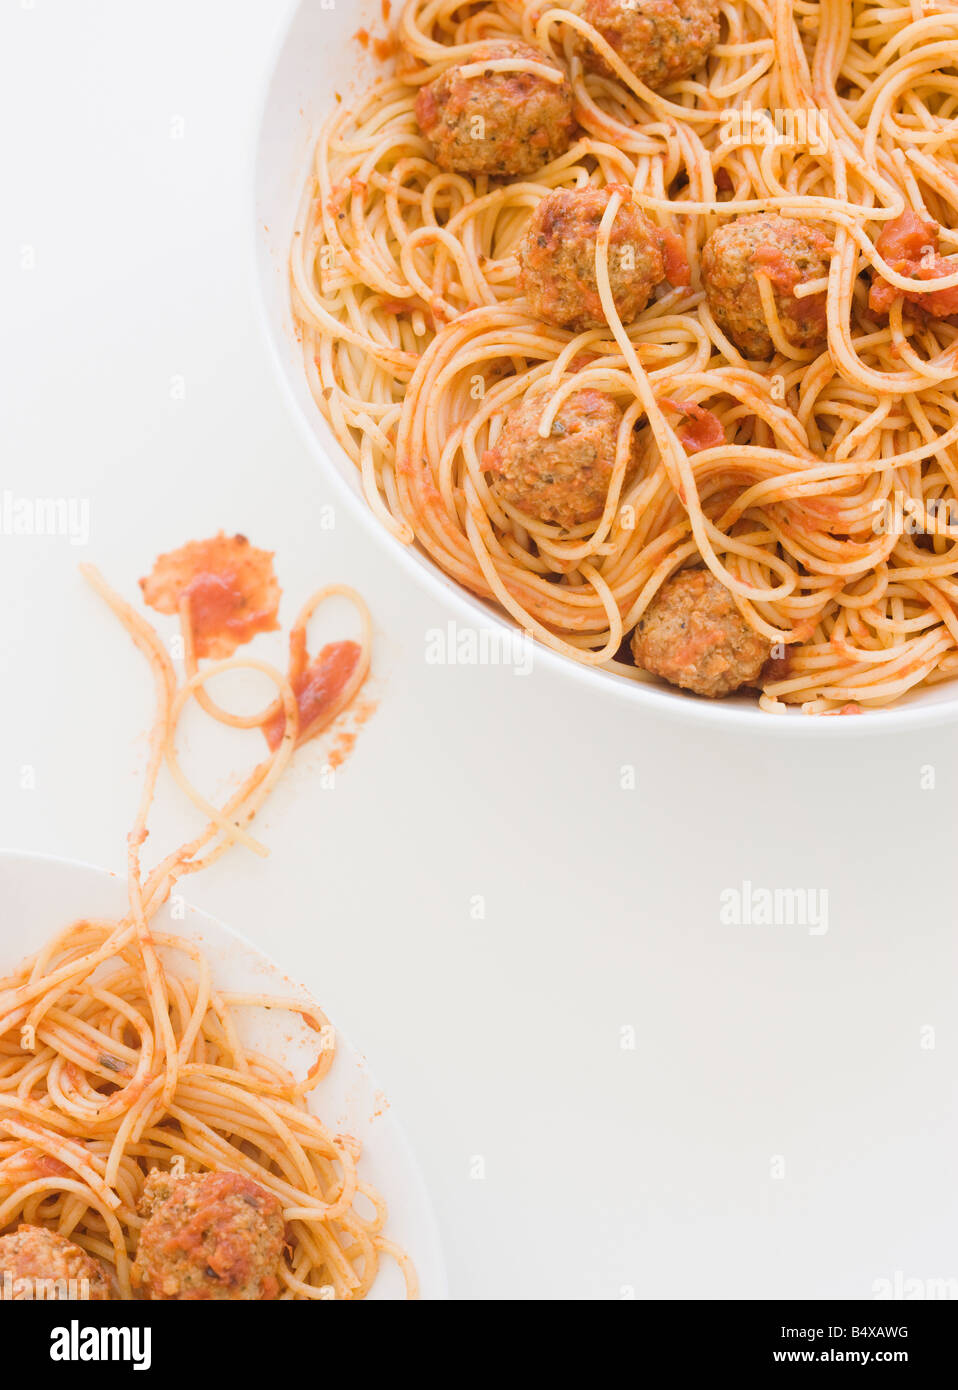 Messy spaghetti and meatballs Stock Photo